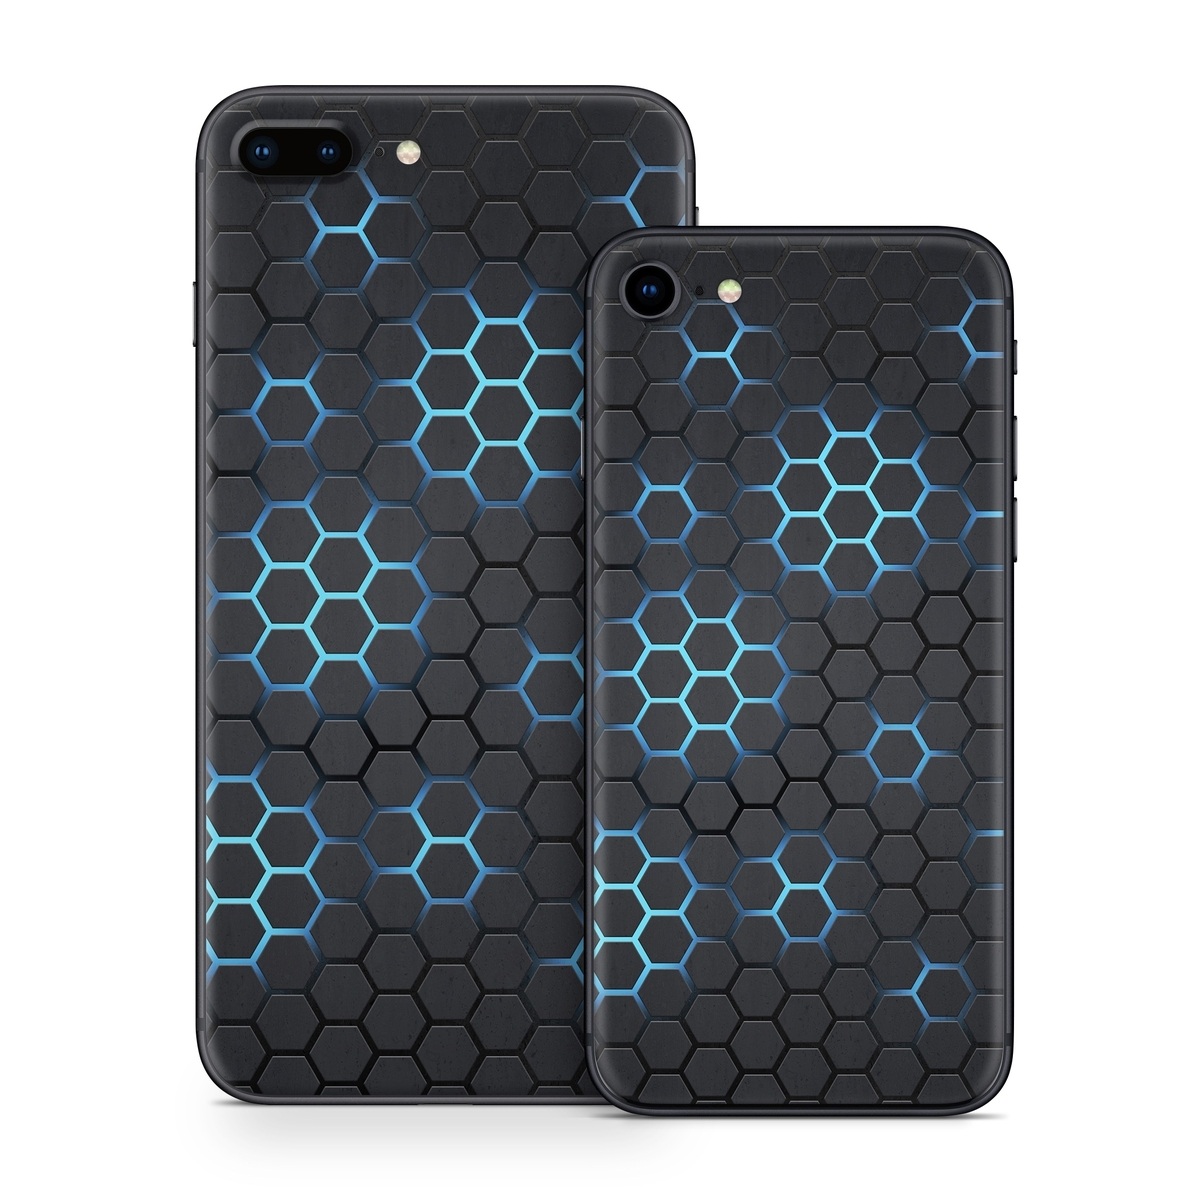 iPhone 8 Series Skin design of Pattern, Water, Design, Circle, Metal, Mesh, Sphere, Symmetry, with black, gray, blue colors